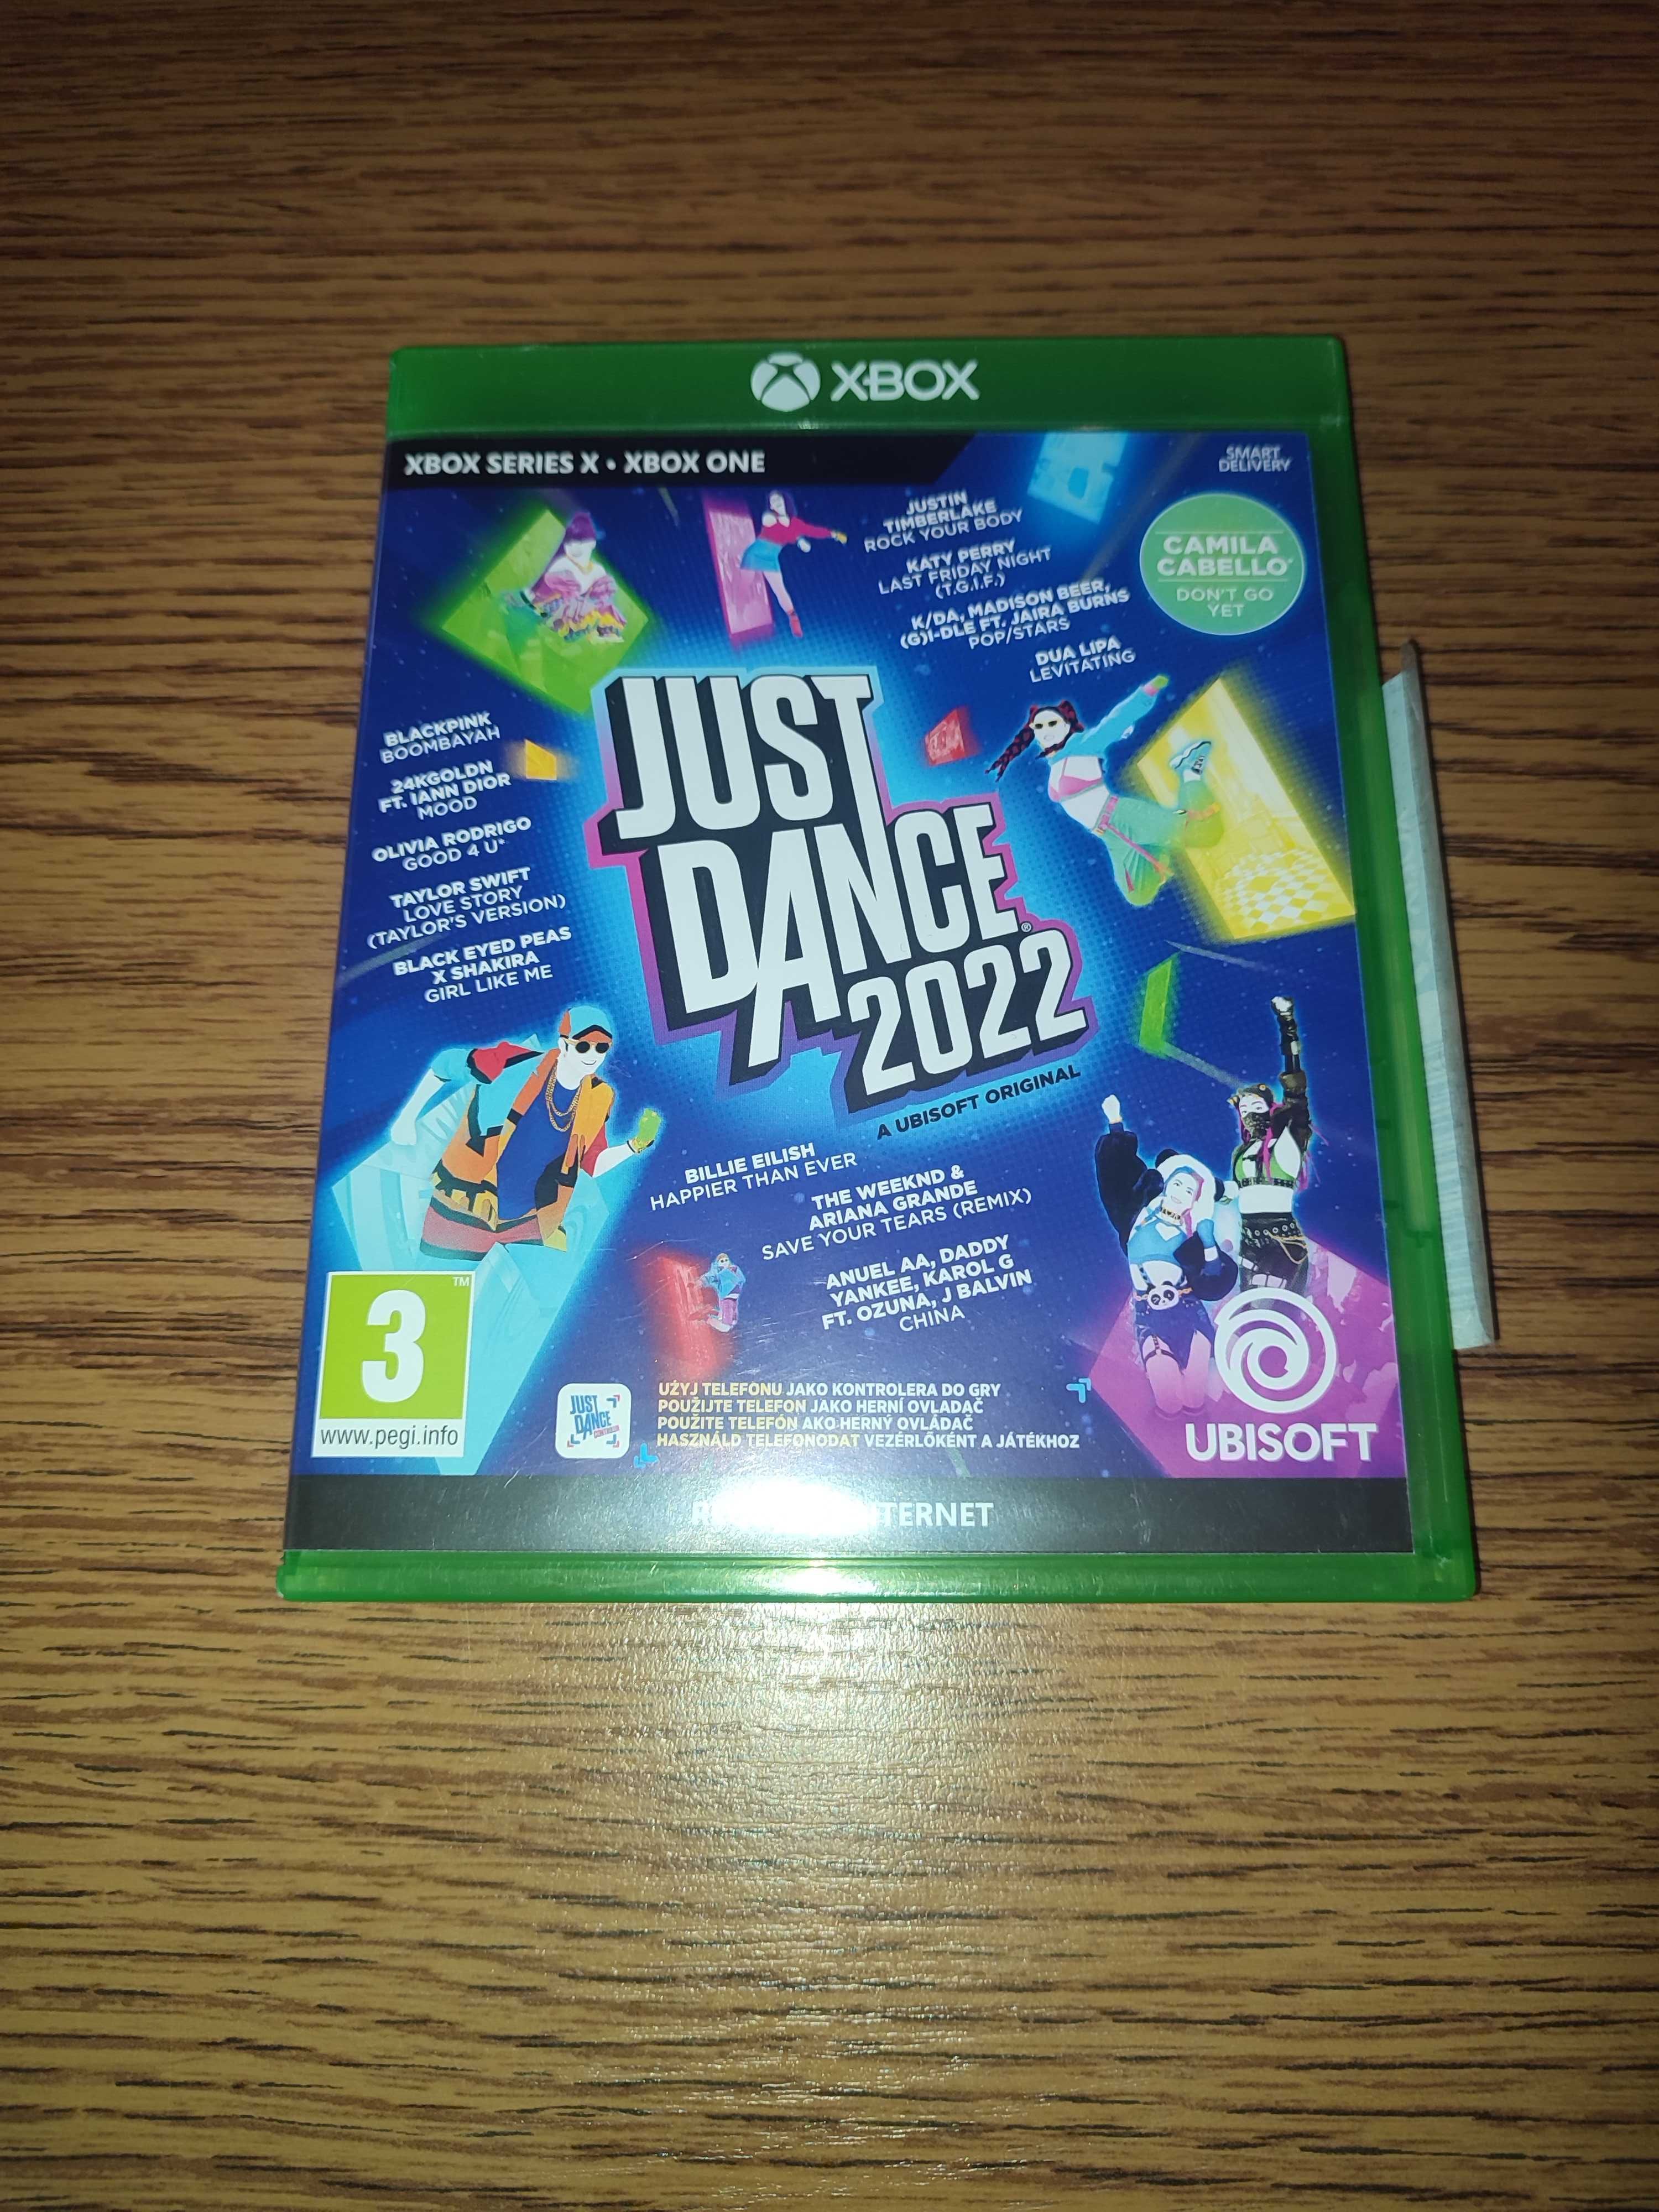 Okazja!!! Gra Just Dance 2022 na Xbox One/S/X/! Super Stan!